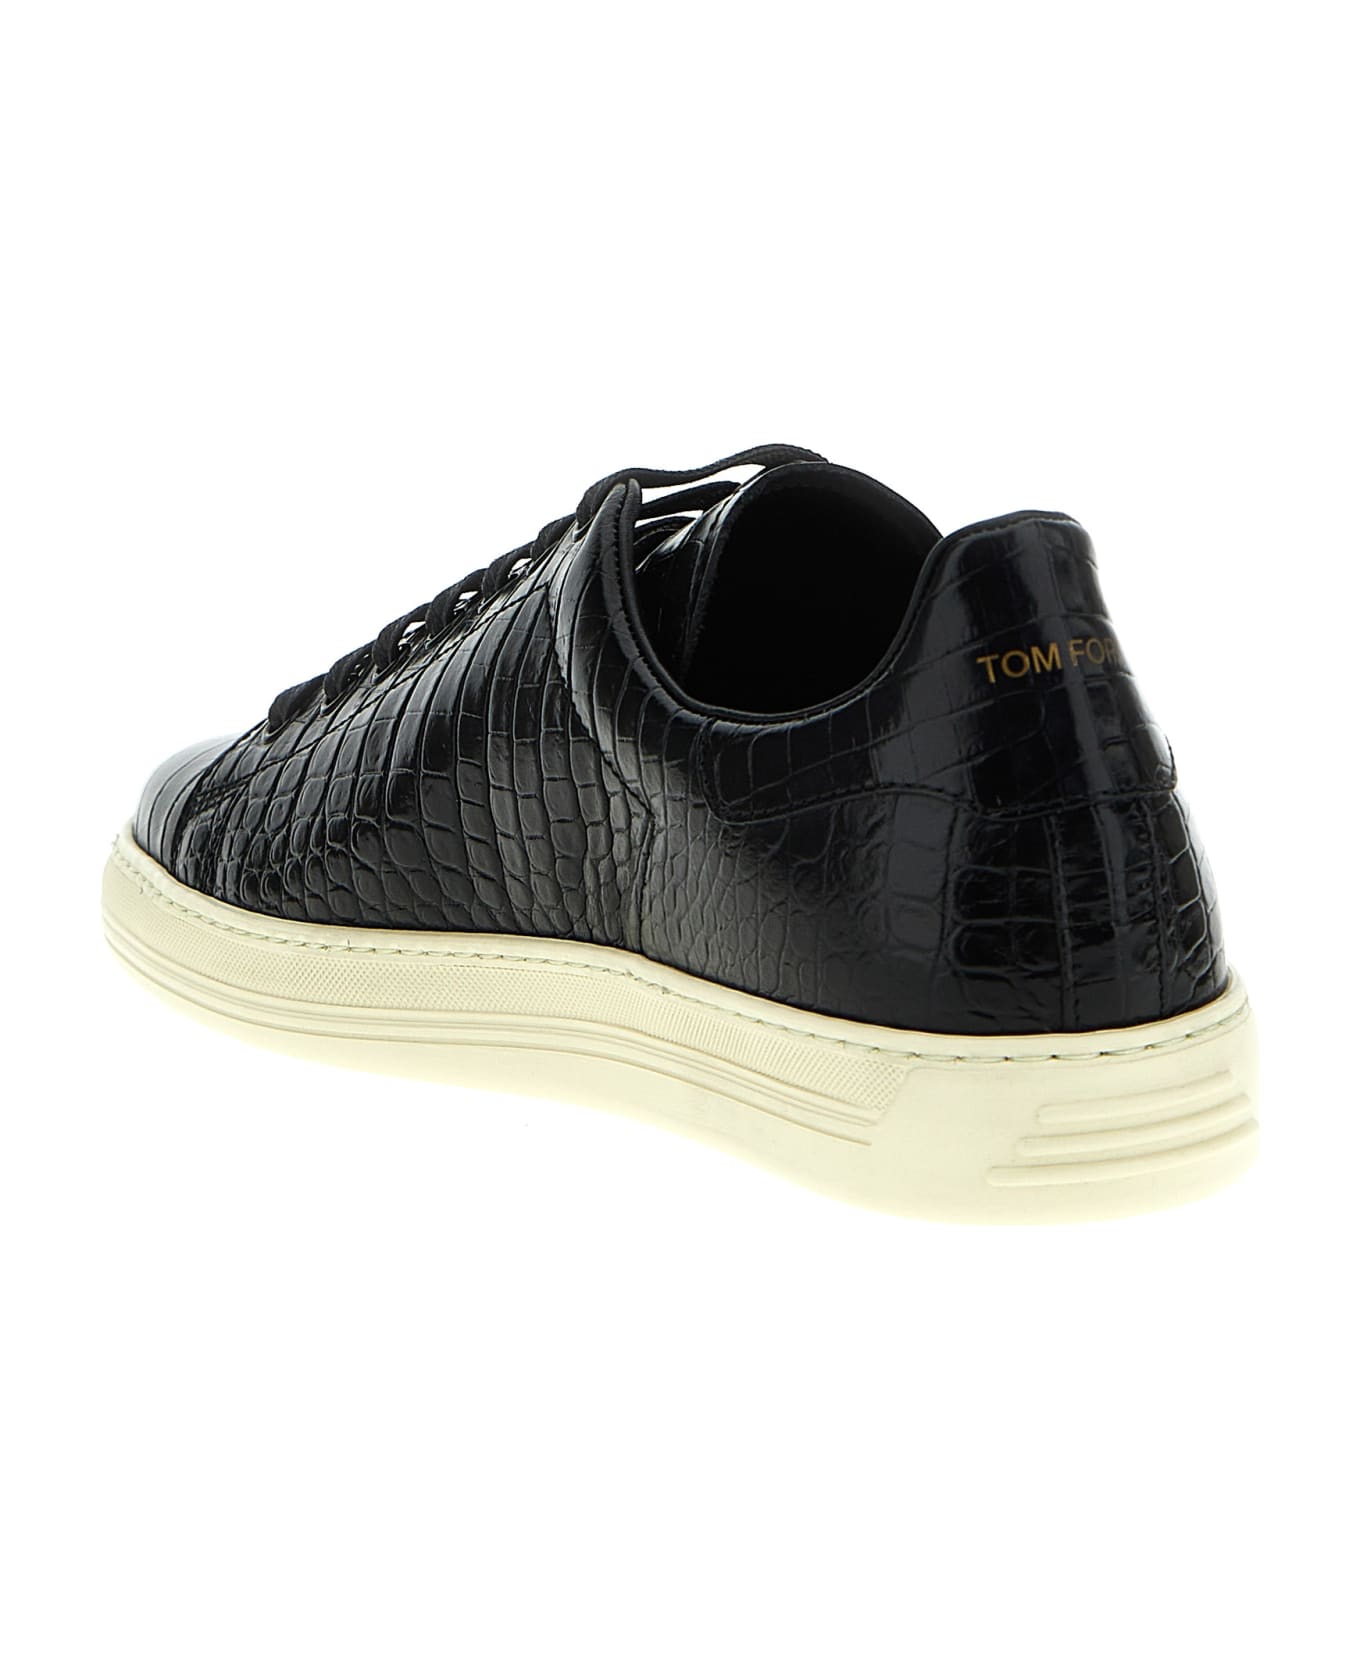 Tom Ford Croc Print Sneakers - Black  